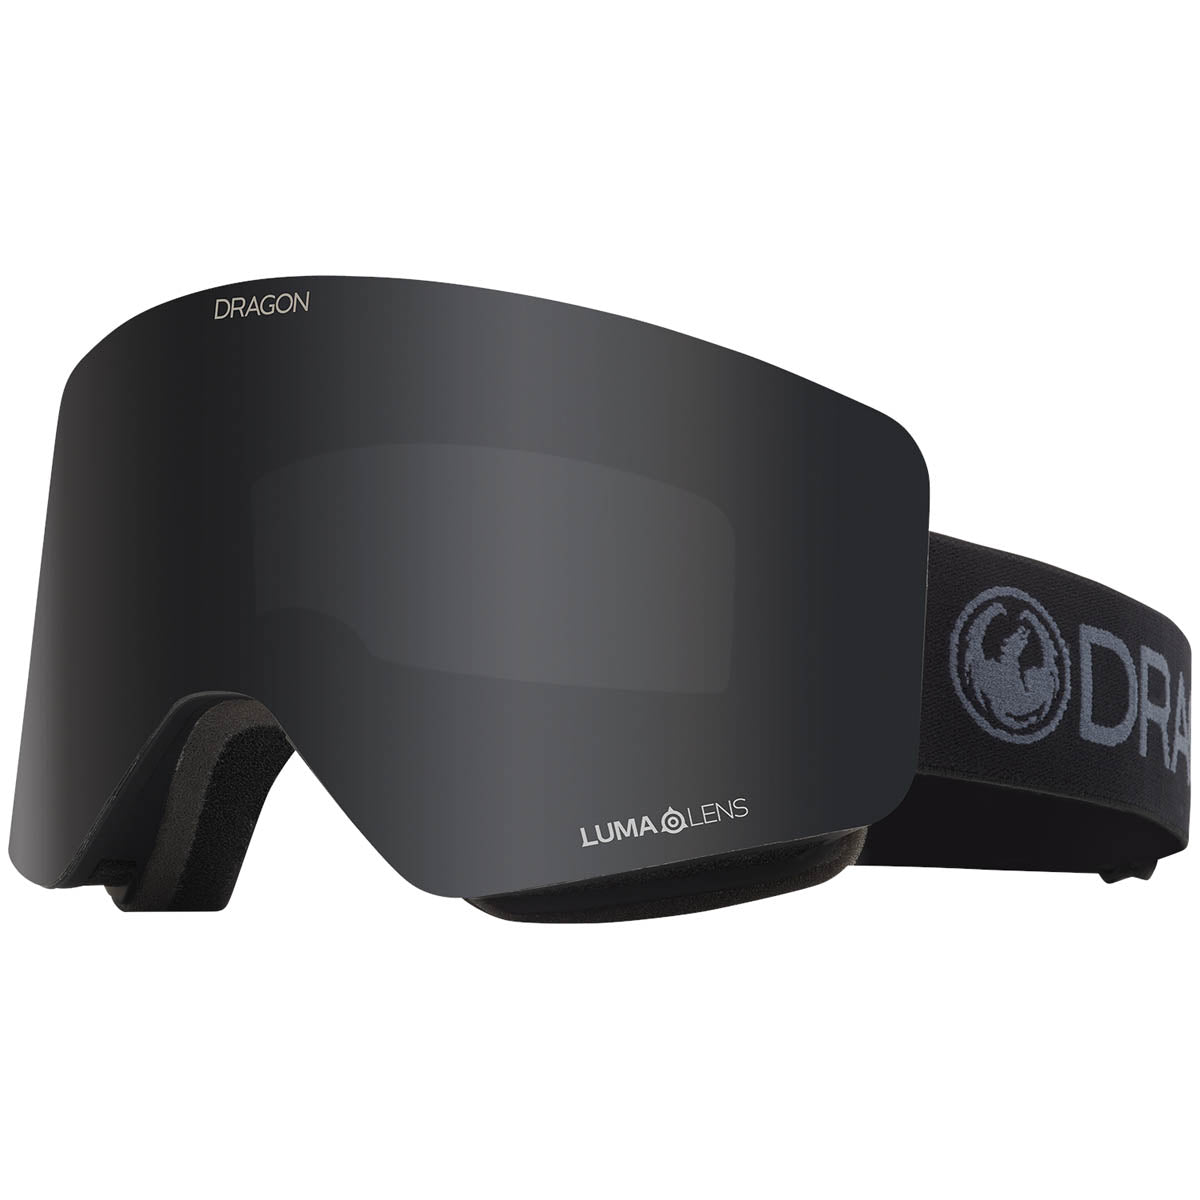 Dragon R1 Otg Snowboard Goggles - Blackout/Lumalens Dark Smoke image 1